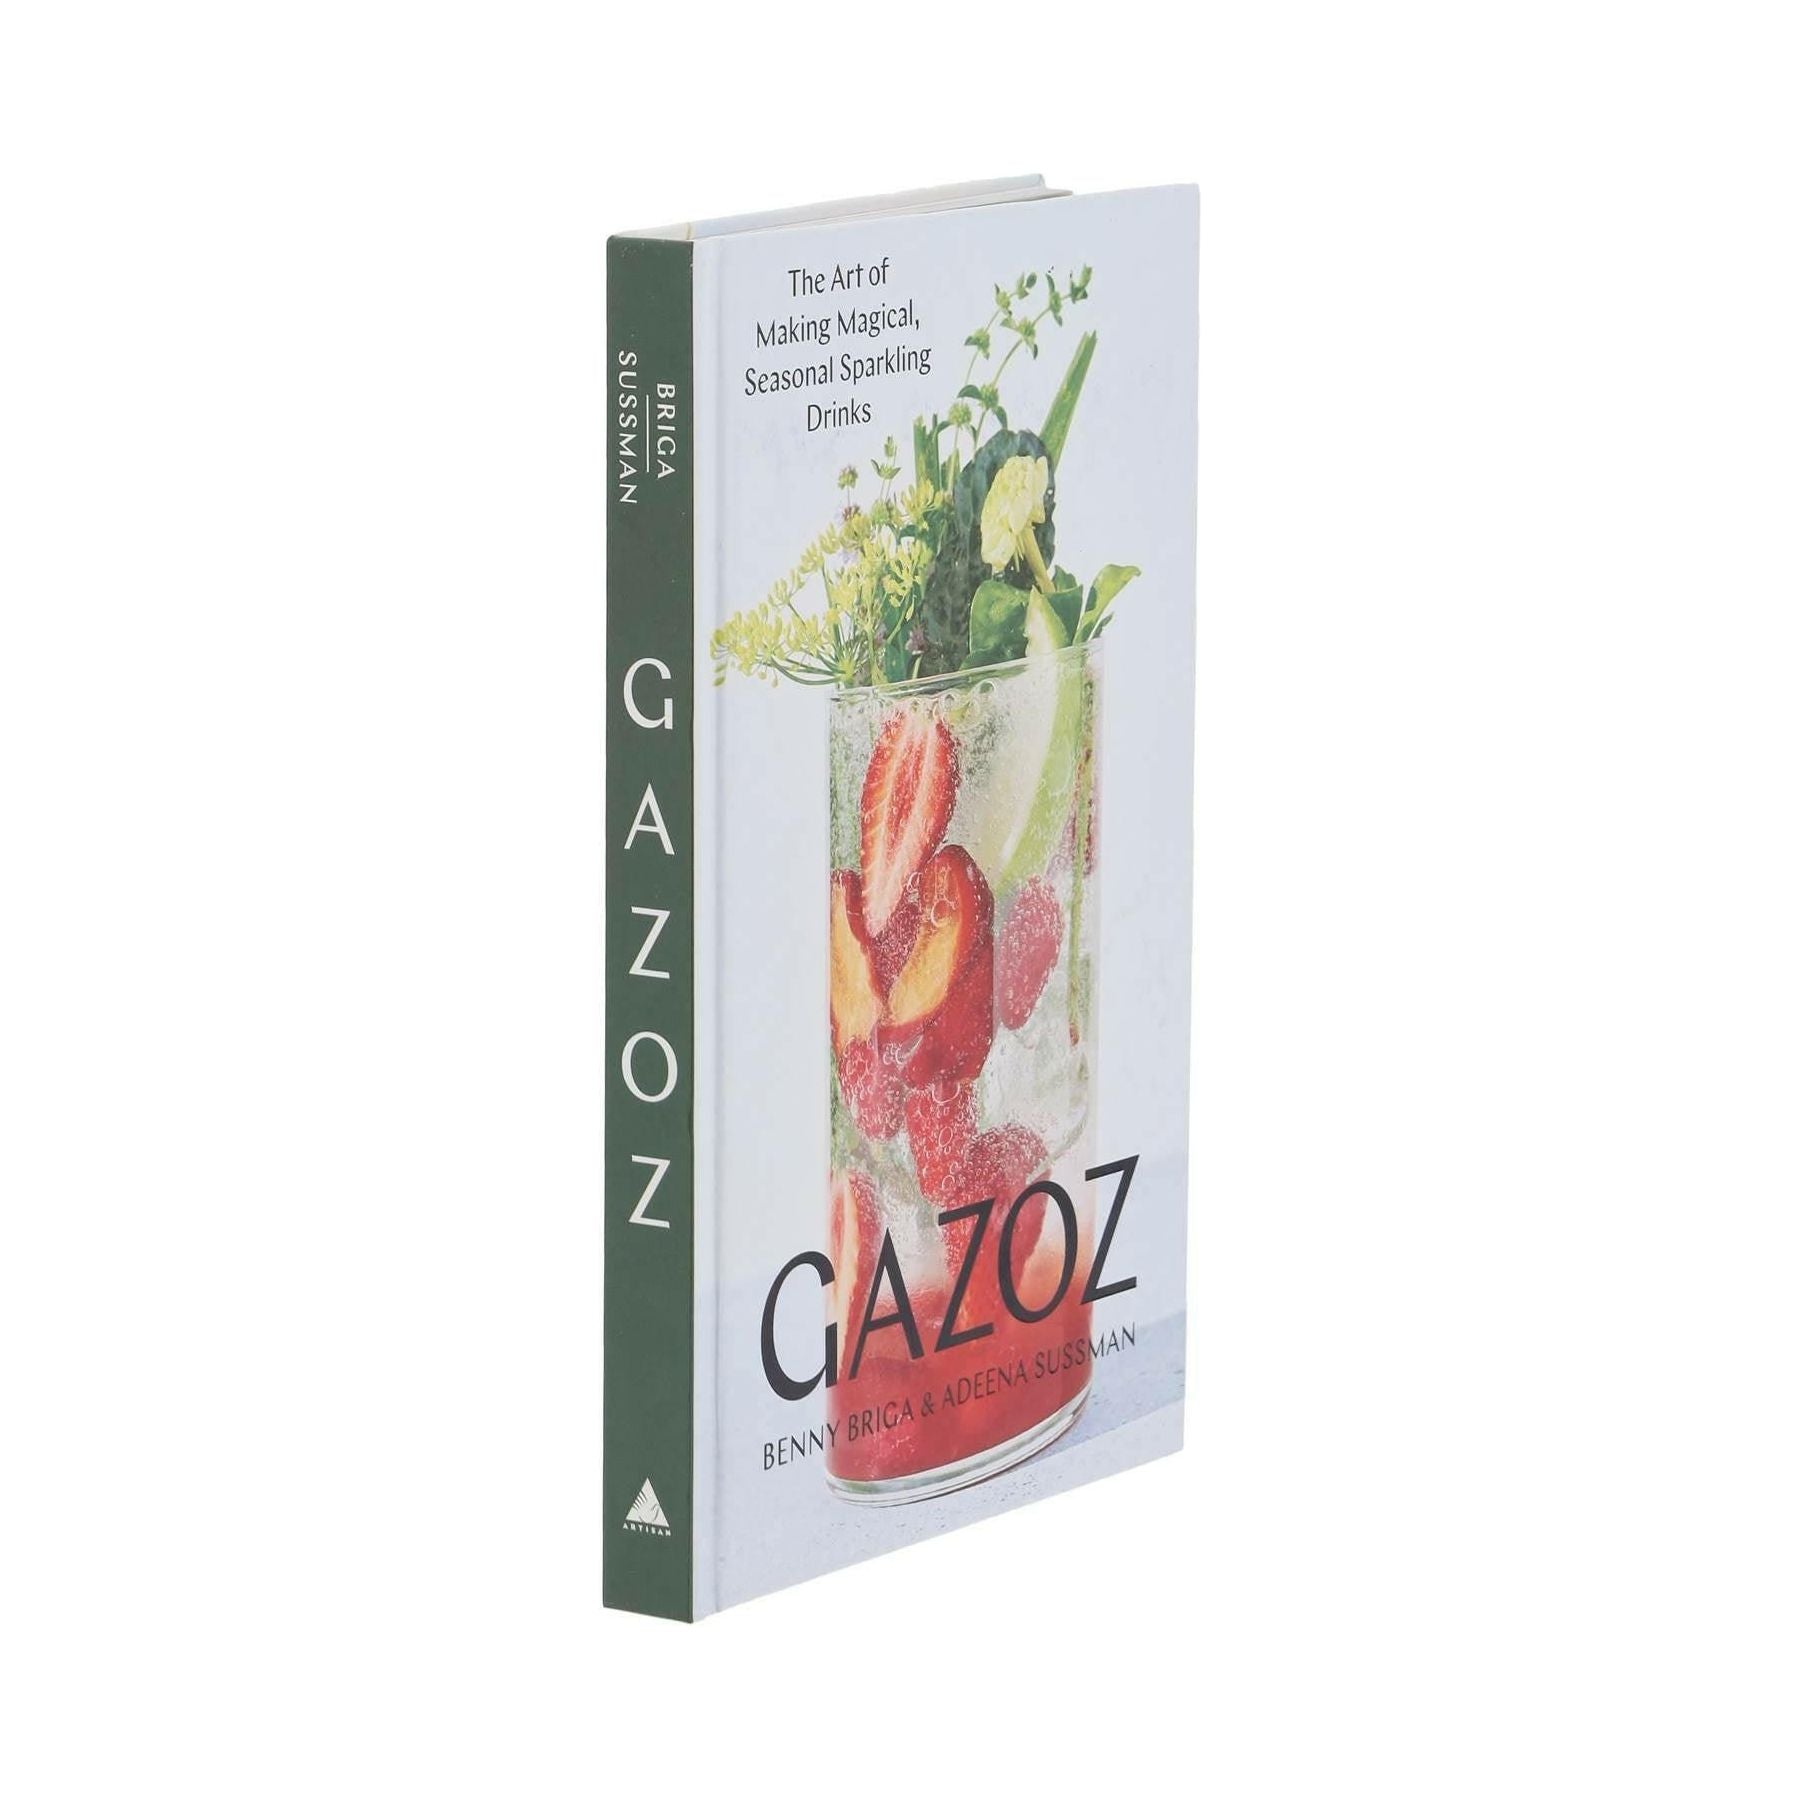 Gazoz The Art Of Making Magical, Seasonal Sparkling Drinks NEW MAGS JOHN JULIA.